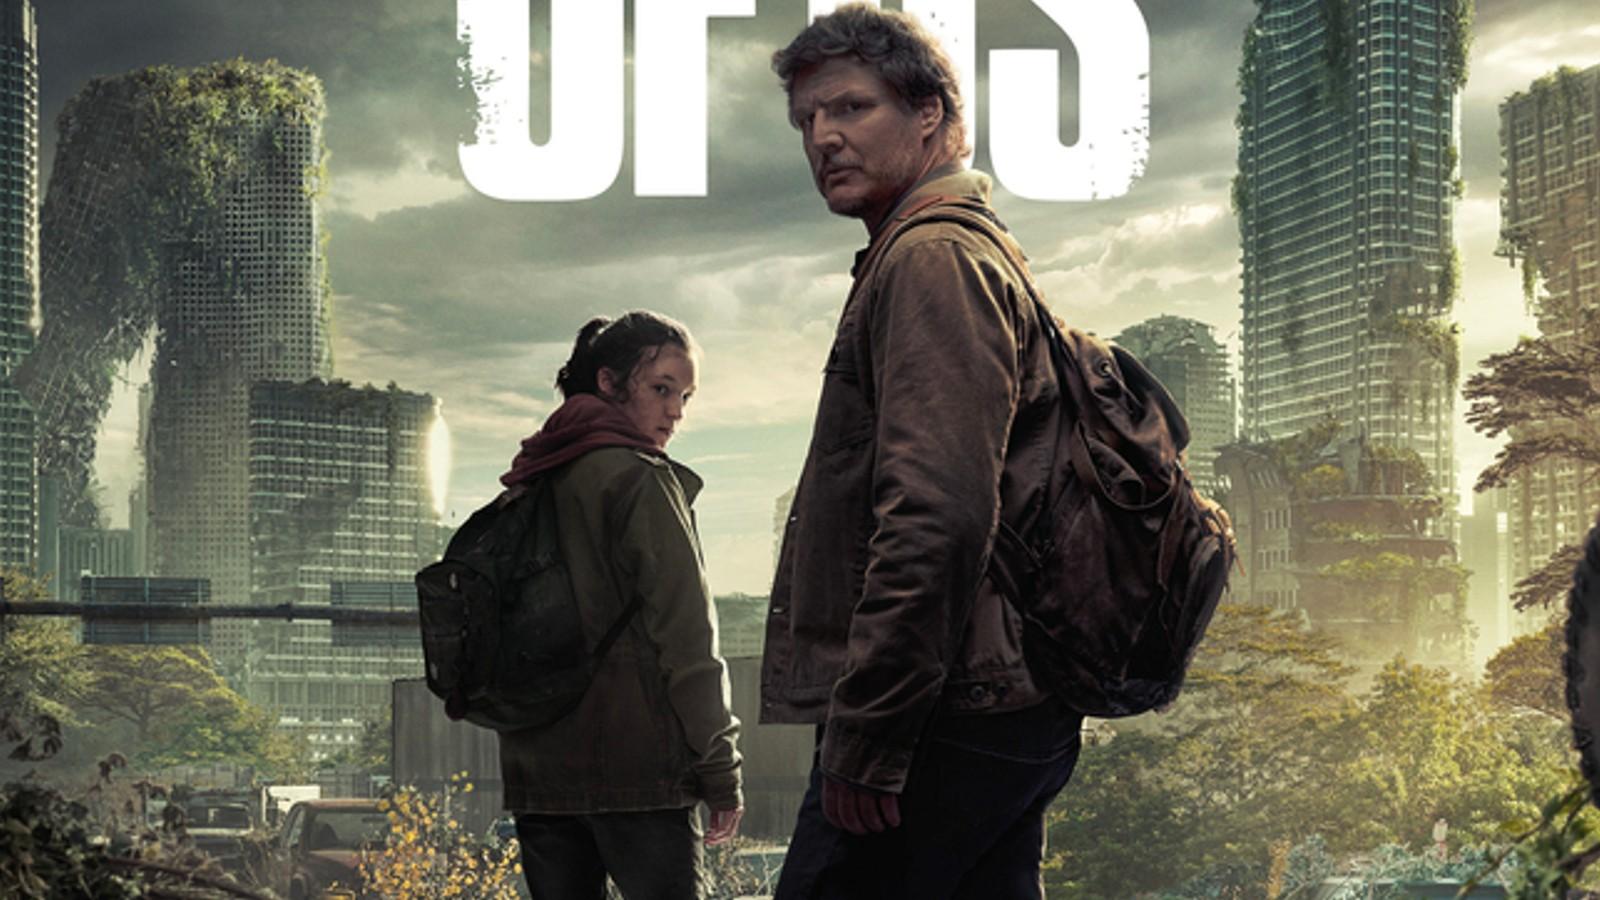 The Last of Us: Season 1 - Soundtrack from the HBO Original Series 2xL –  Mondo